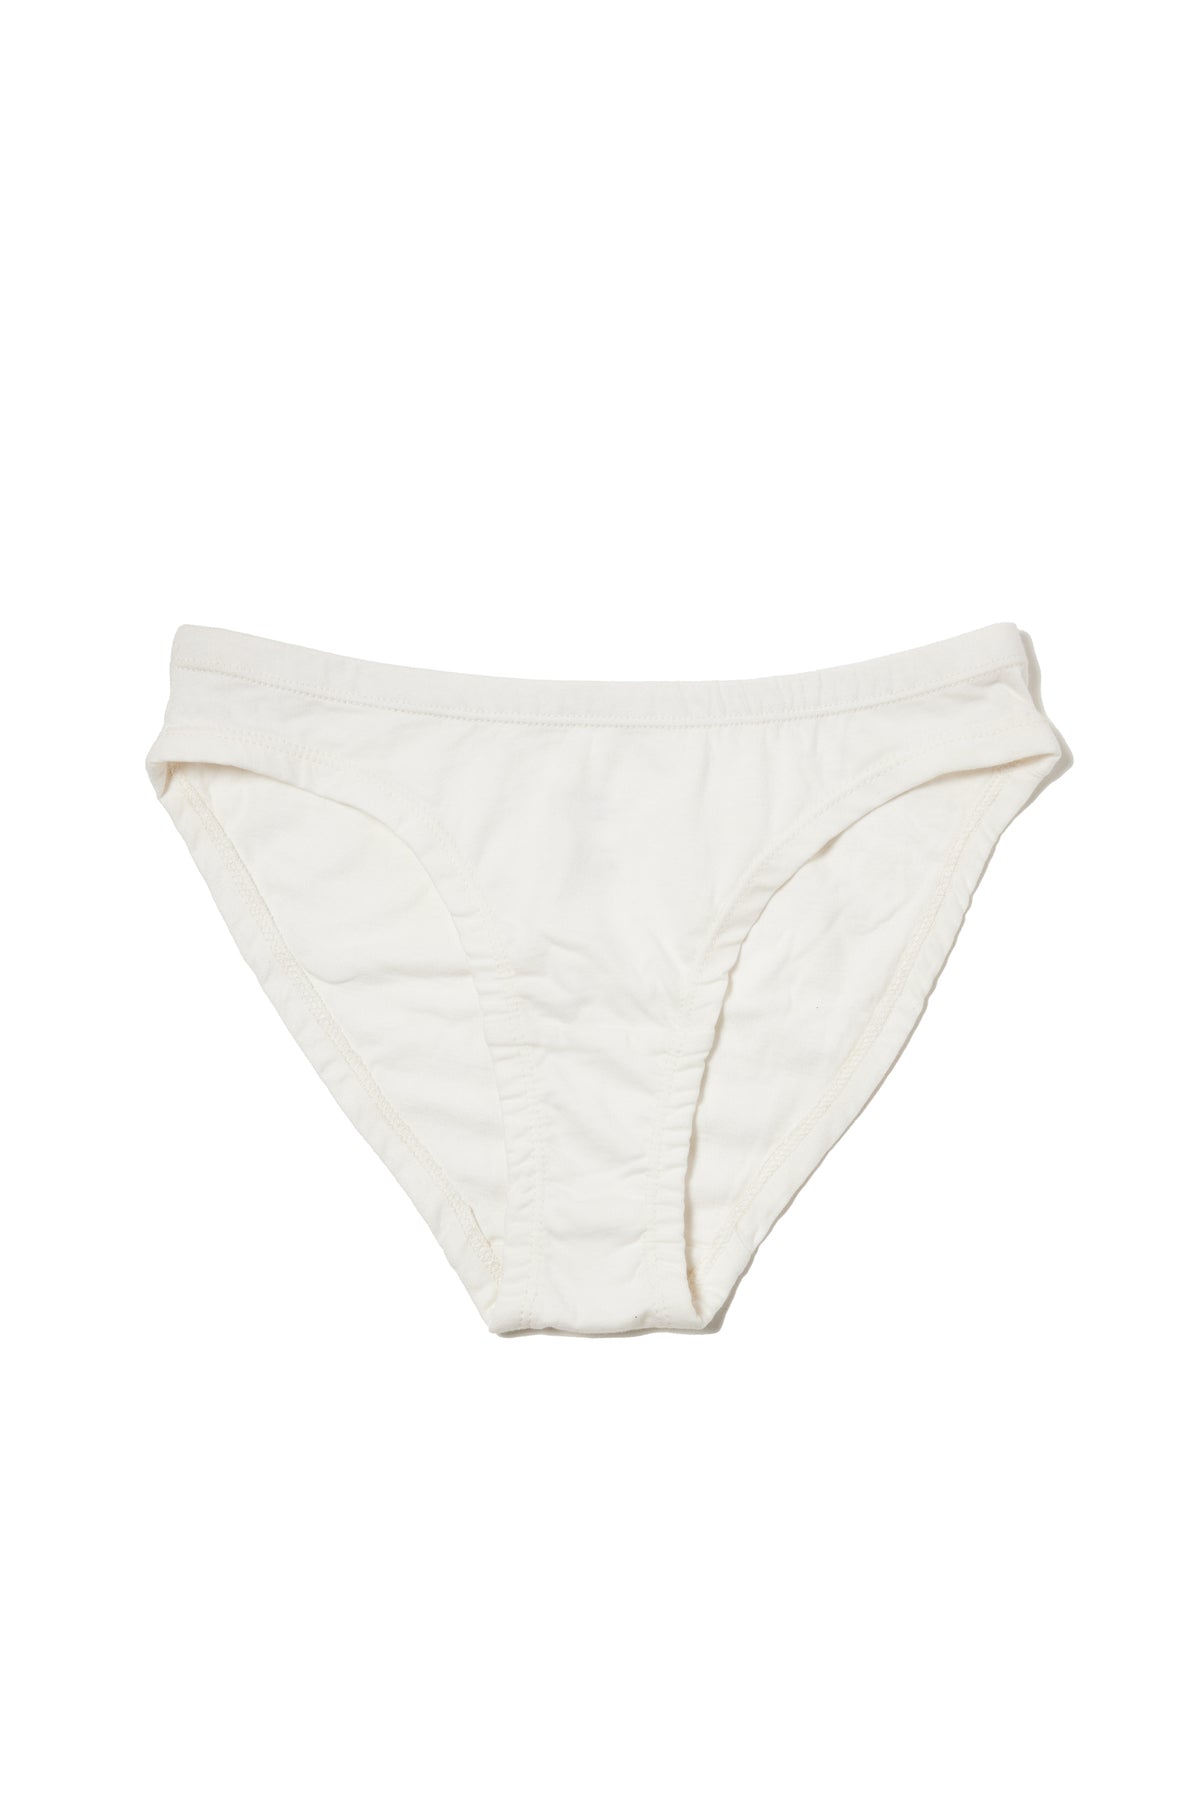 Organic Cotton Bikini Underwear | Women's Undergarment | Chemical-free &  Spandex-free